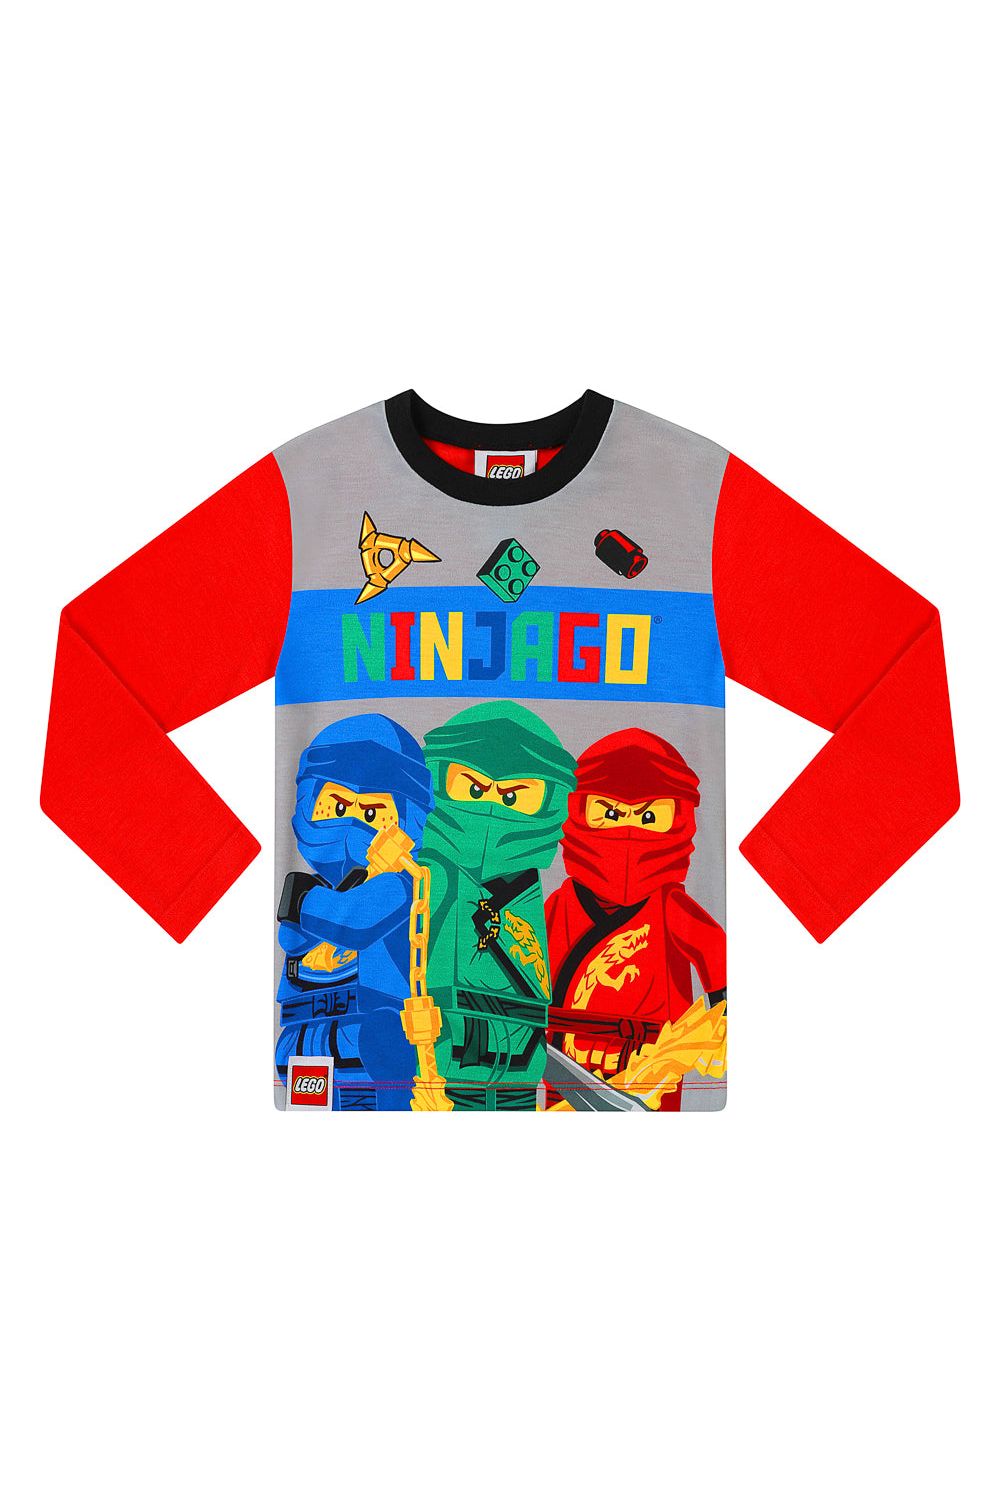 Boys Official Lego Ninjago Long Sleeved Pyjamas Red Black - Pyjamas.com